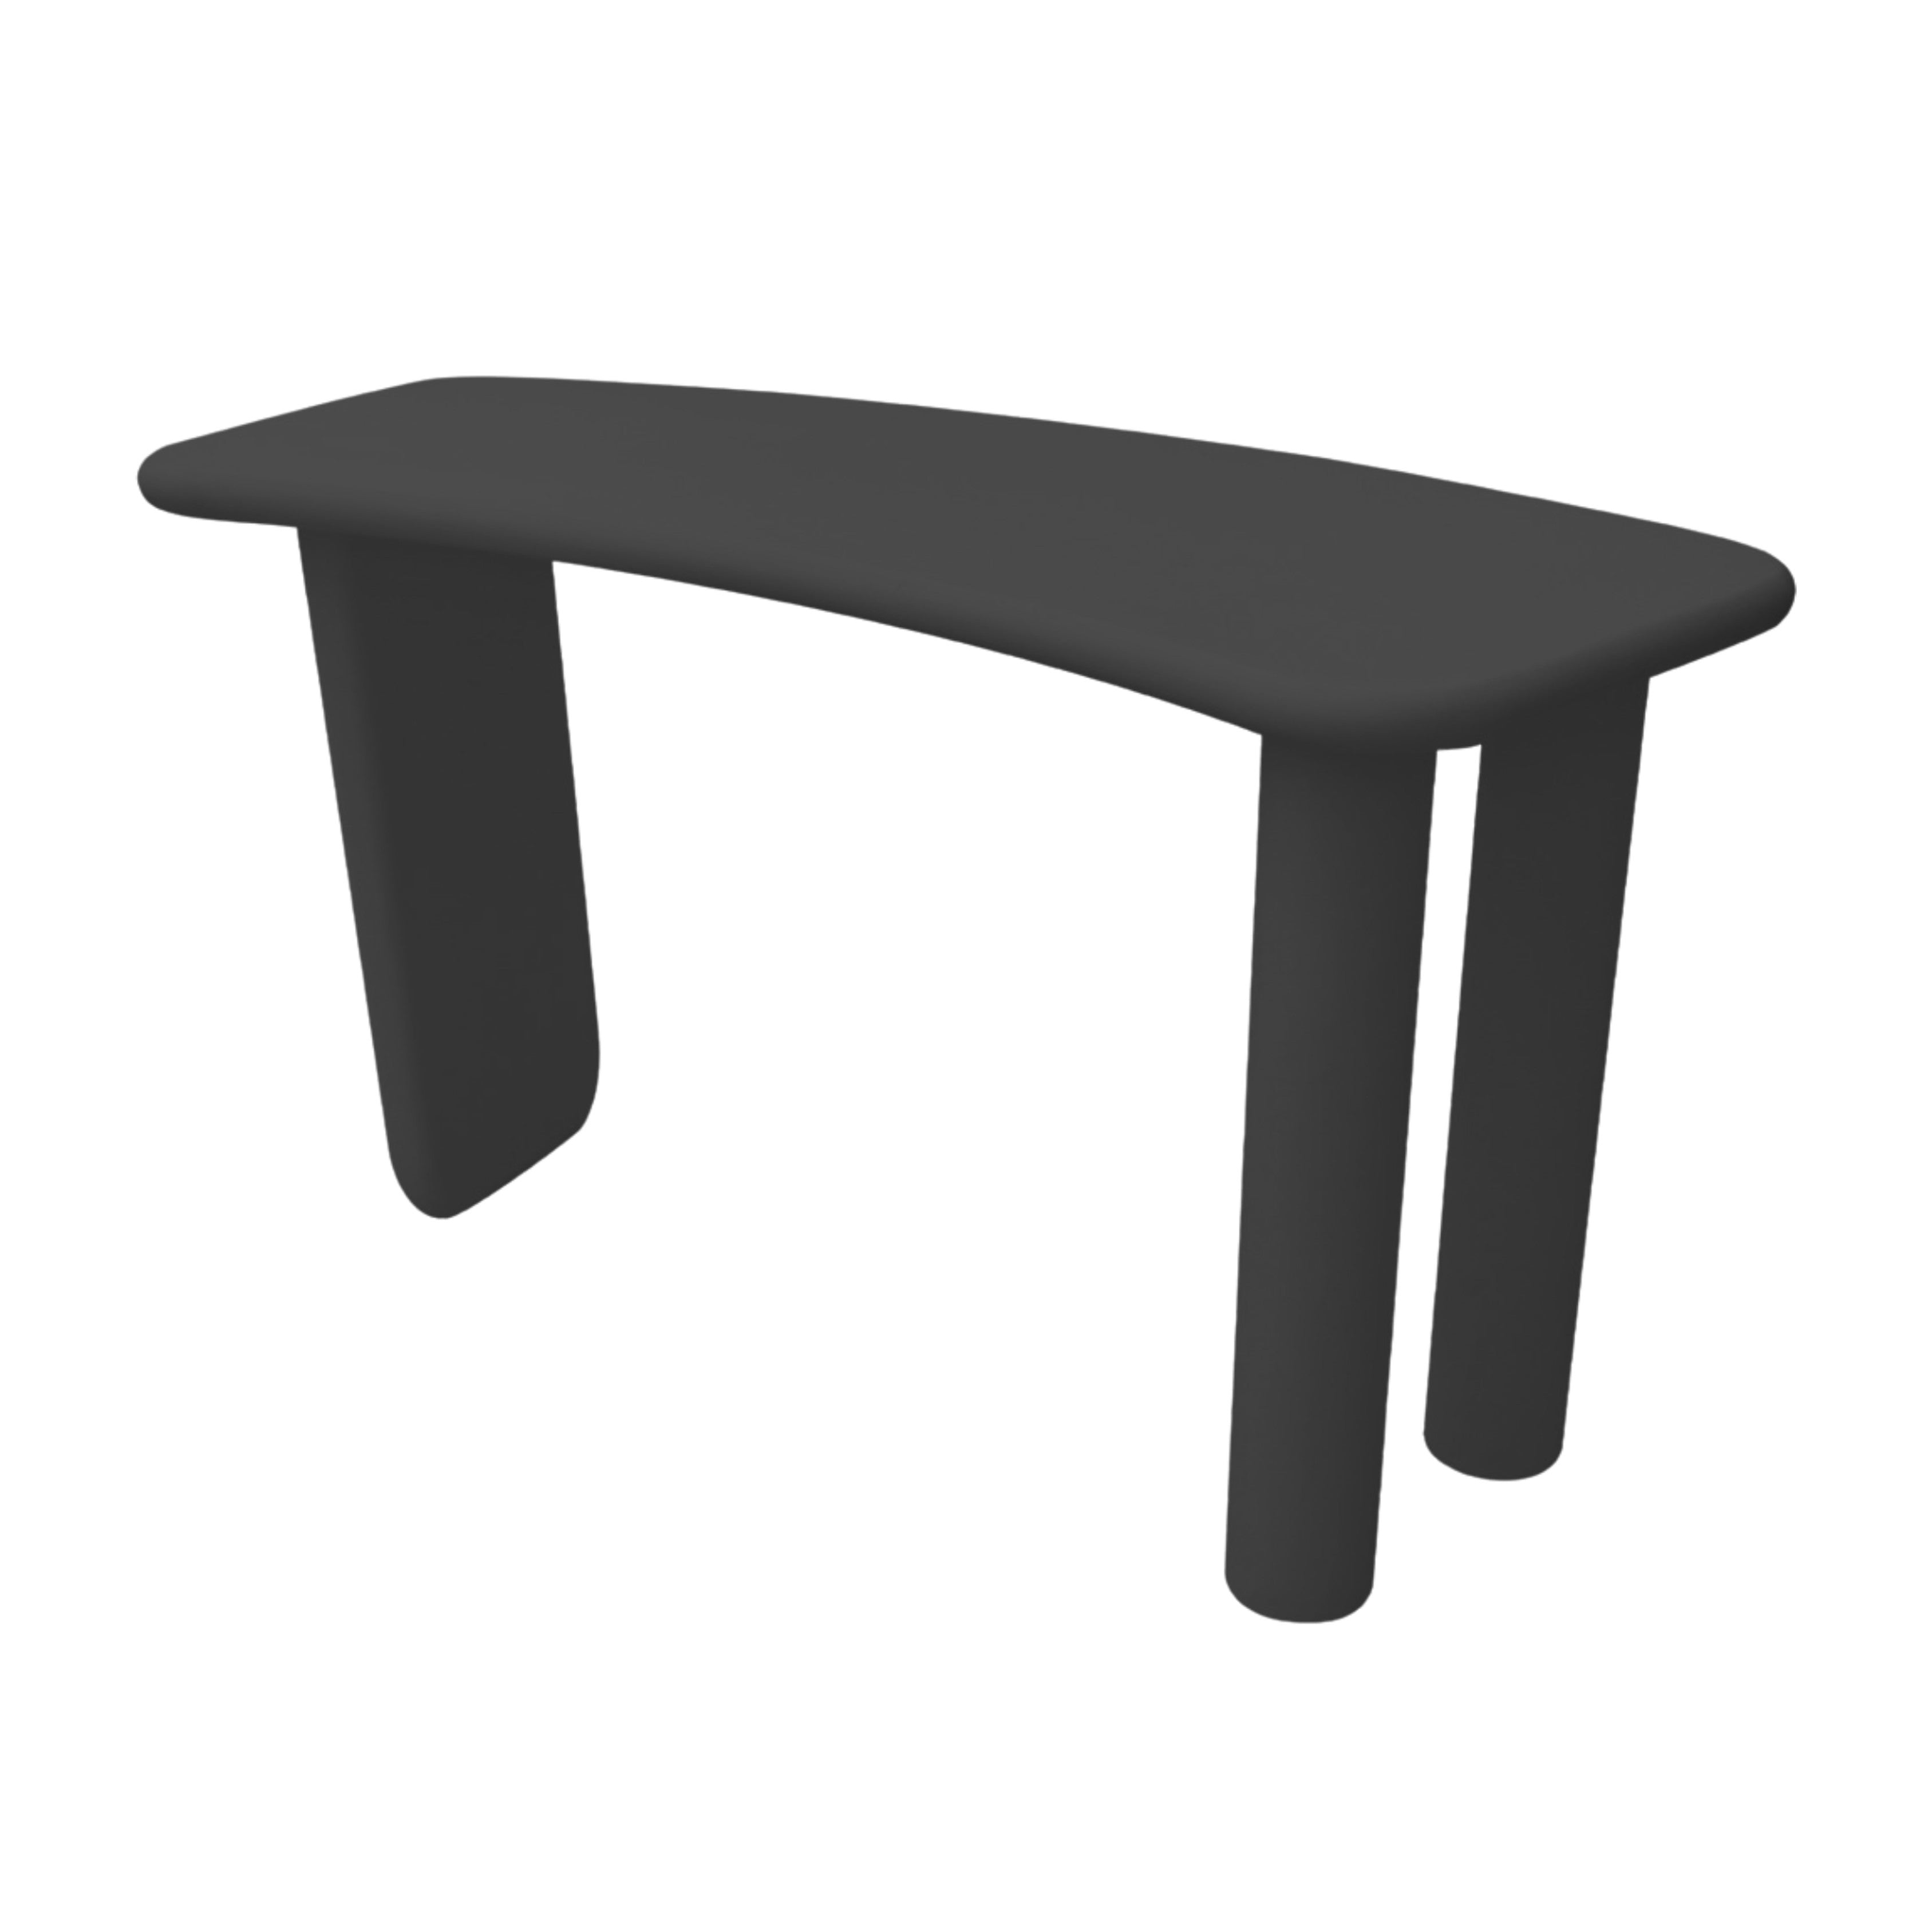 Marseille organic console table, Black Color - Marseille طاولة كونسول عضوية, لون أسود